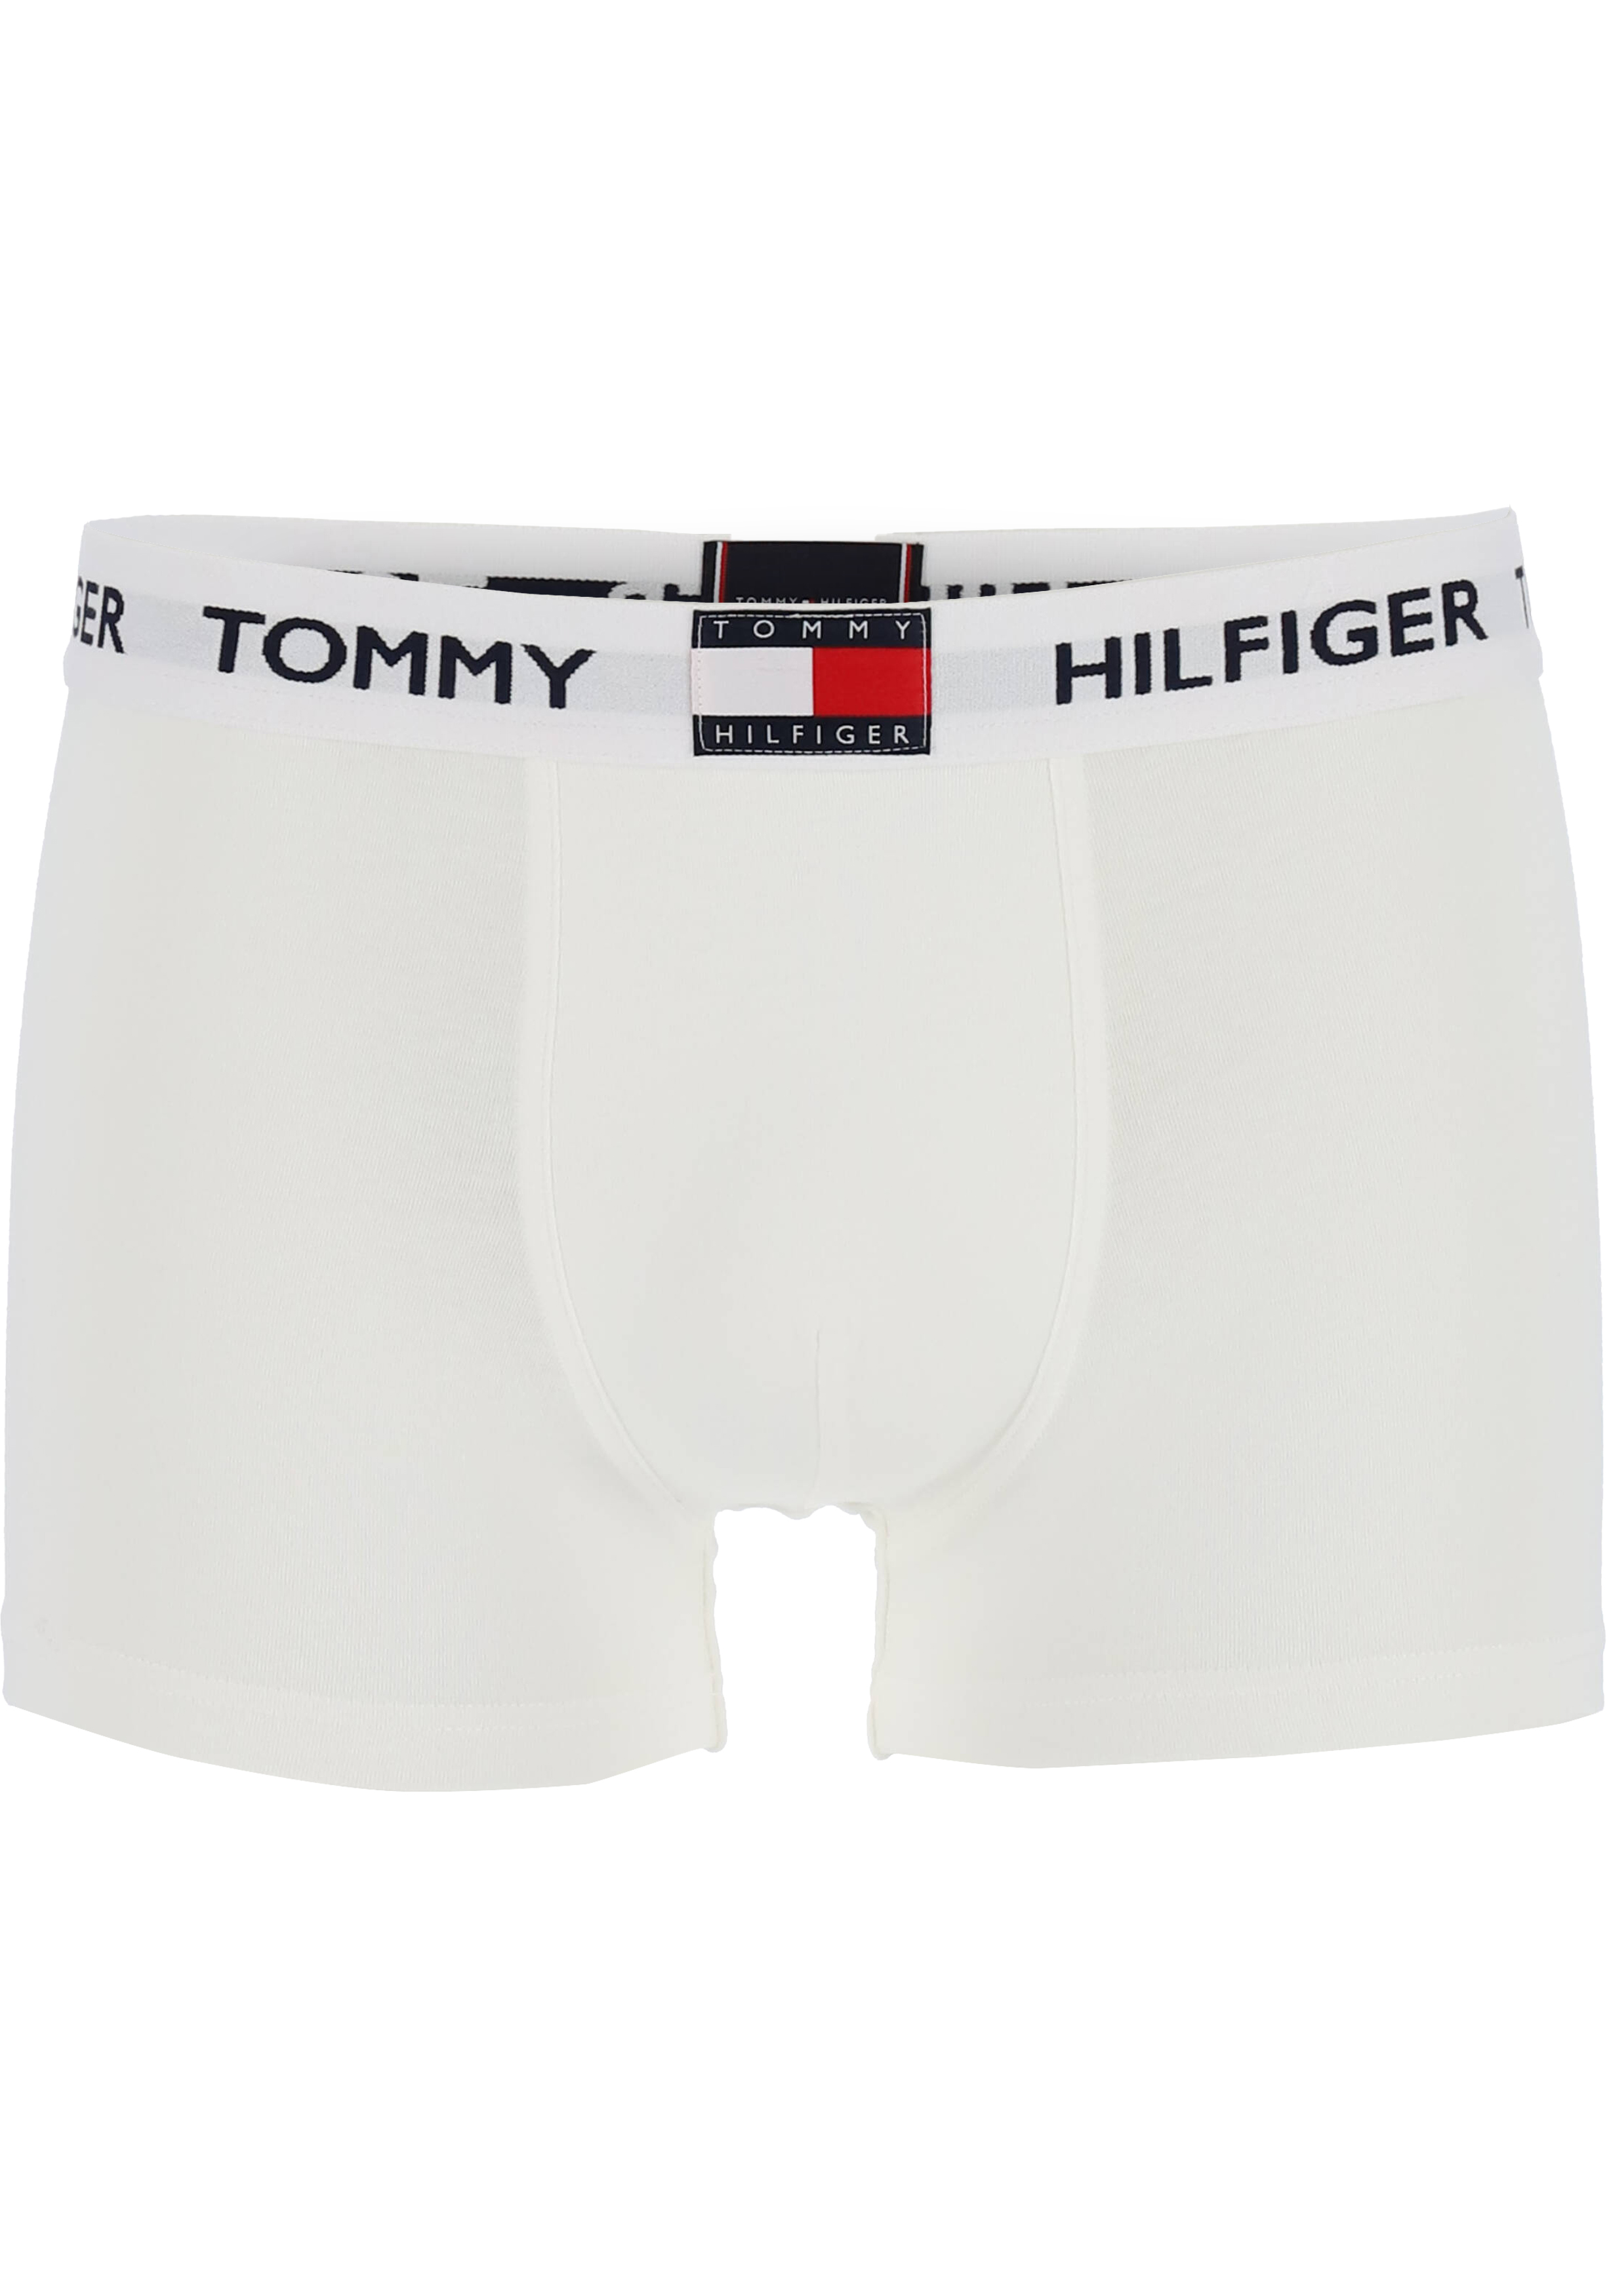 Tommy Hilfiger Tommy 85 trunk (1-pack), heren boxer normale lengte, wit